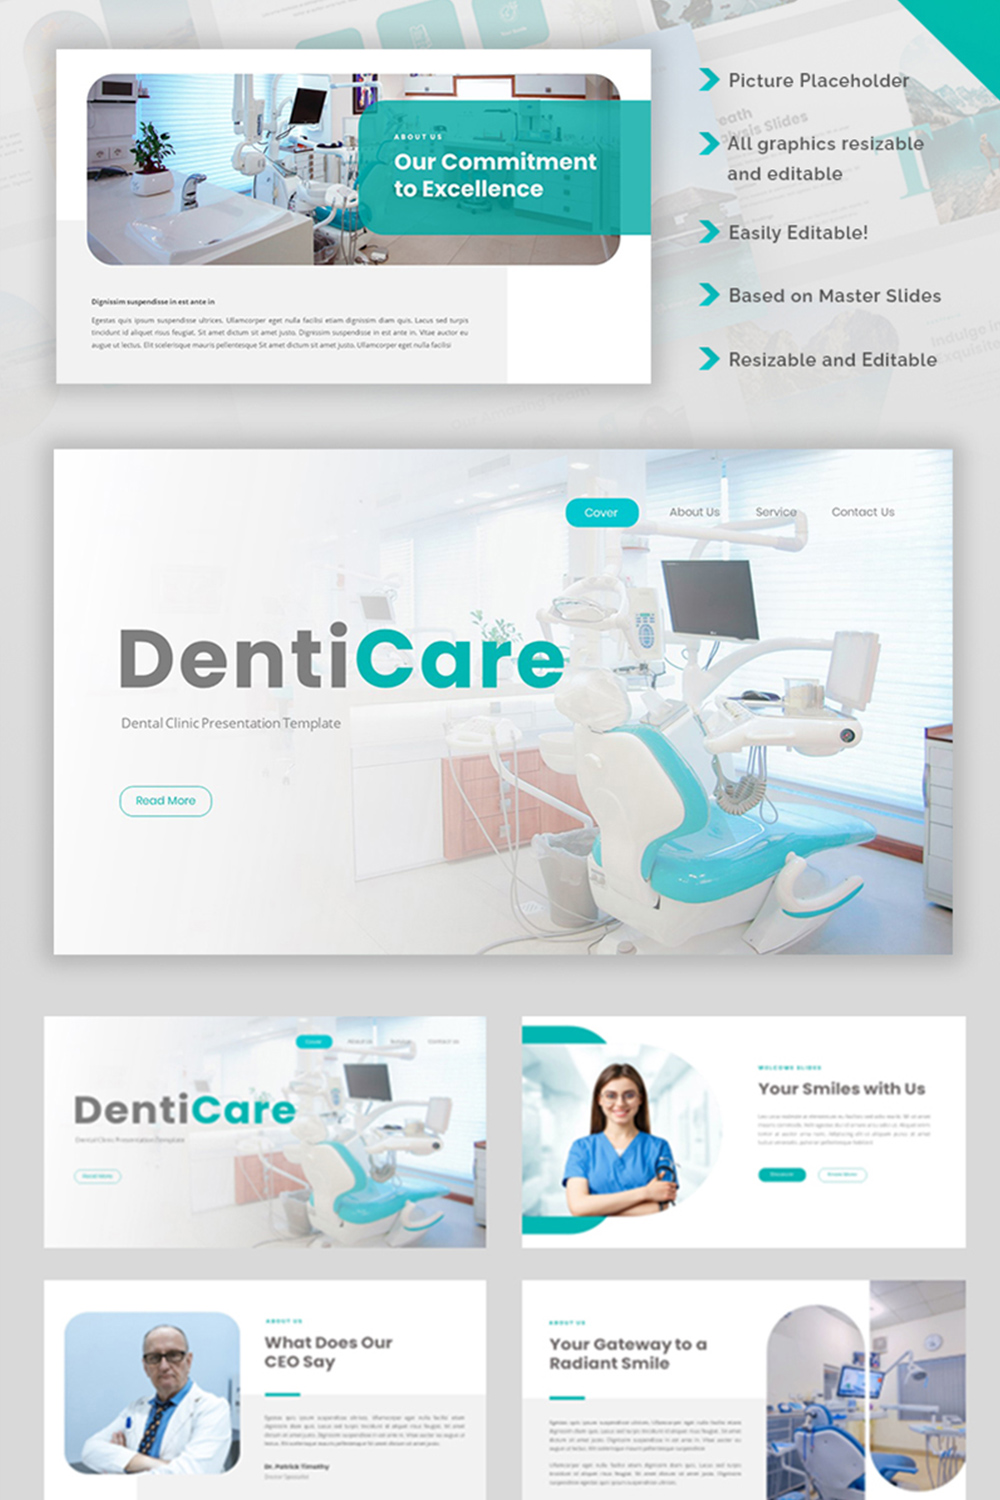 DentiCare-Dental Clinic Google Slides Template pinterest preview image.